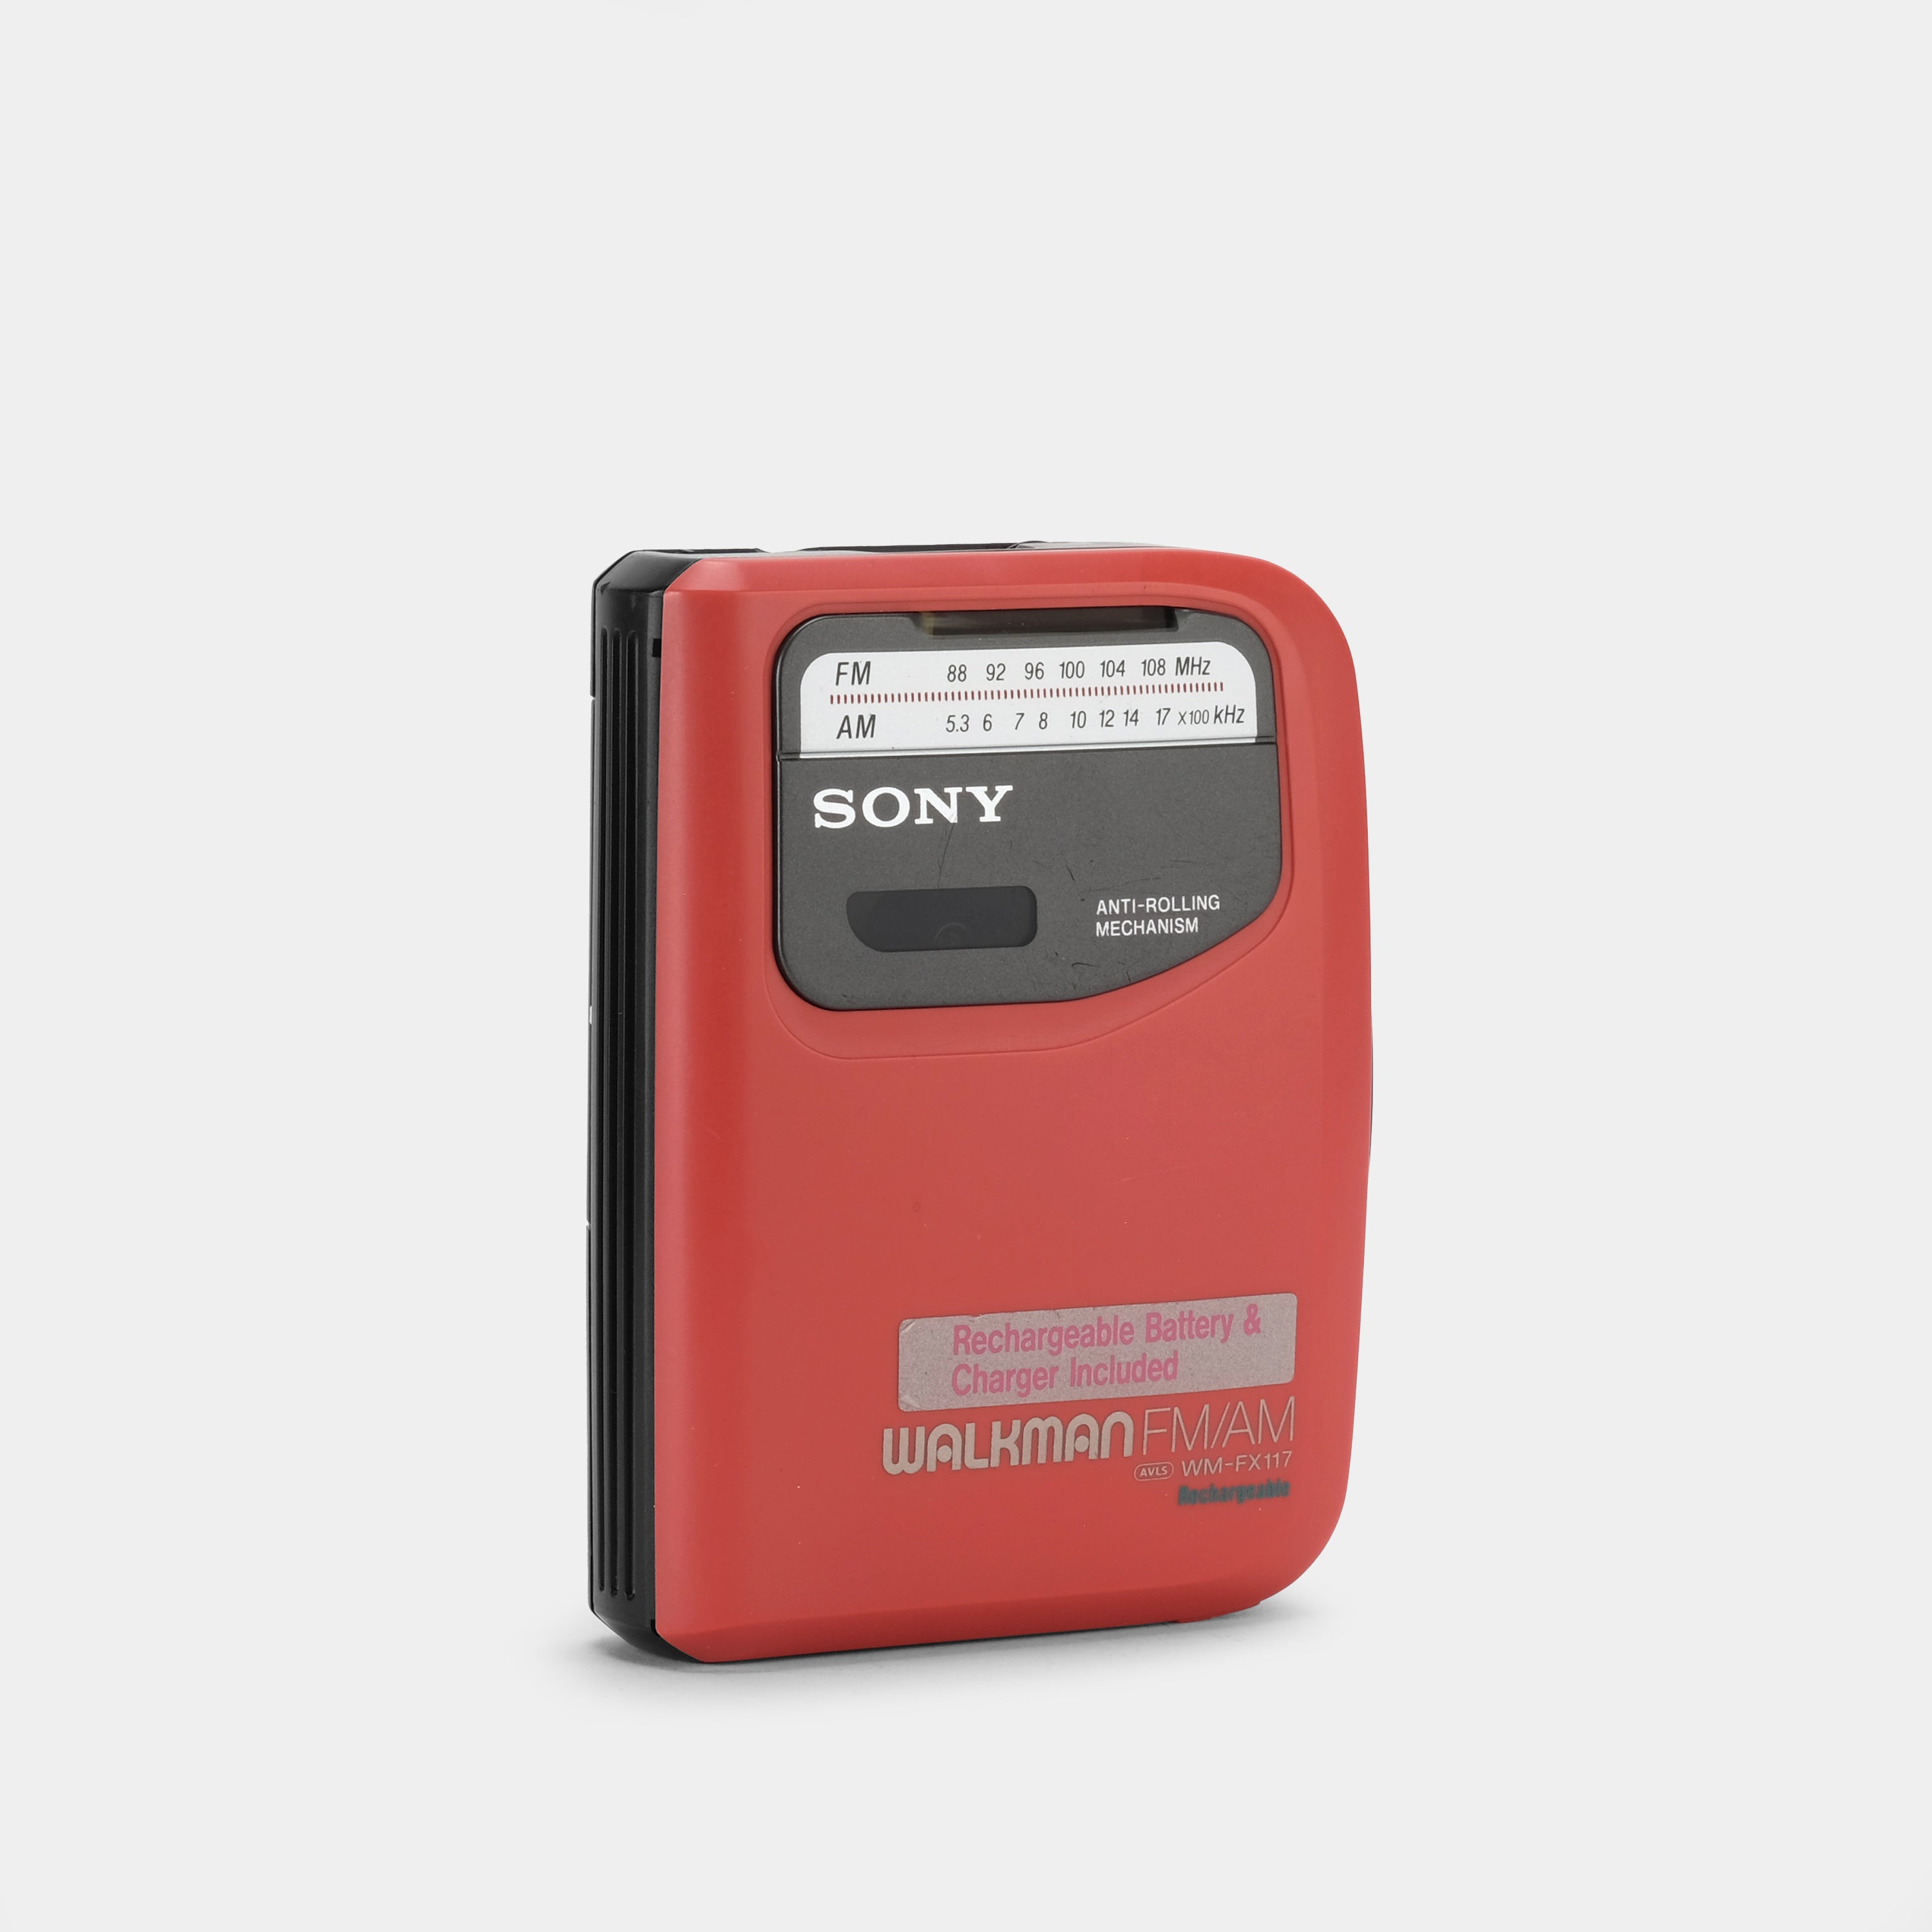 Sony Walkman WM-FX117 AM/FM Red Portable Cassette Player